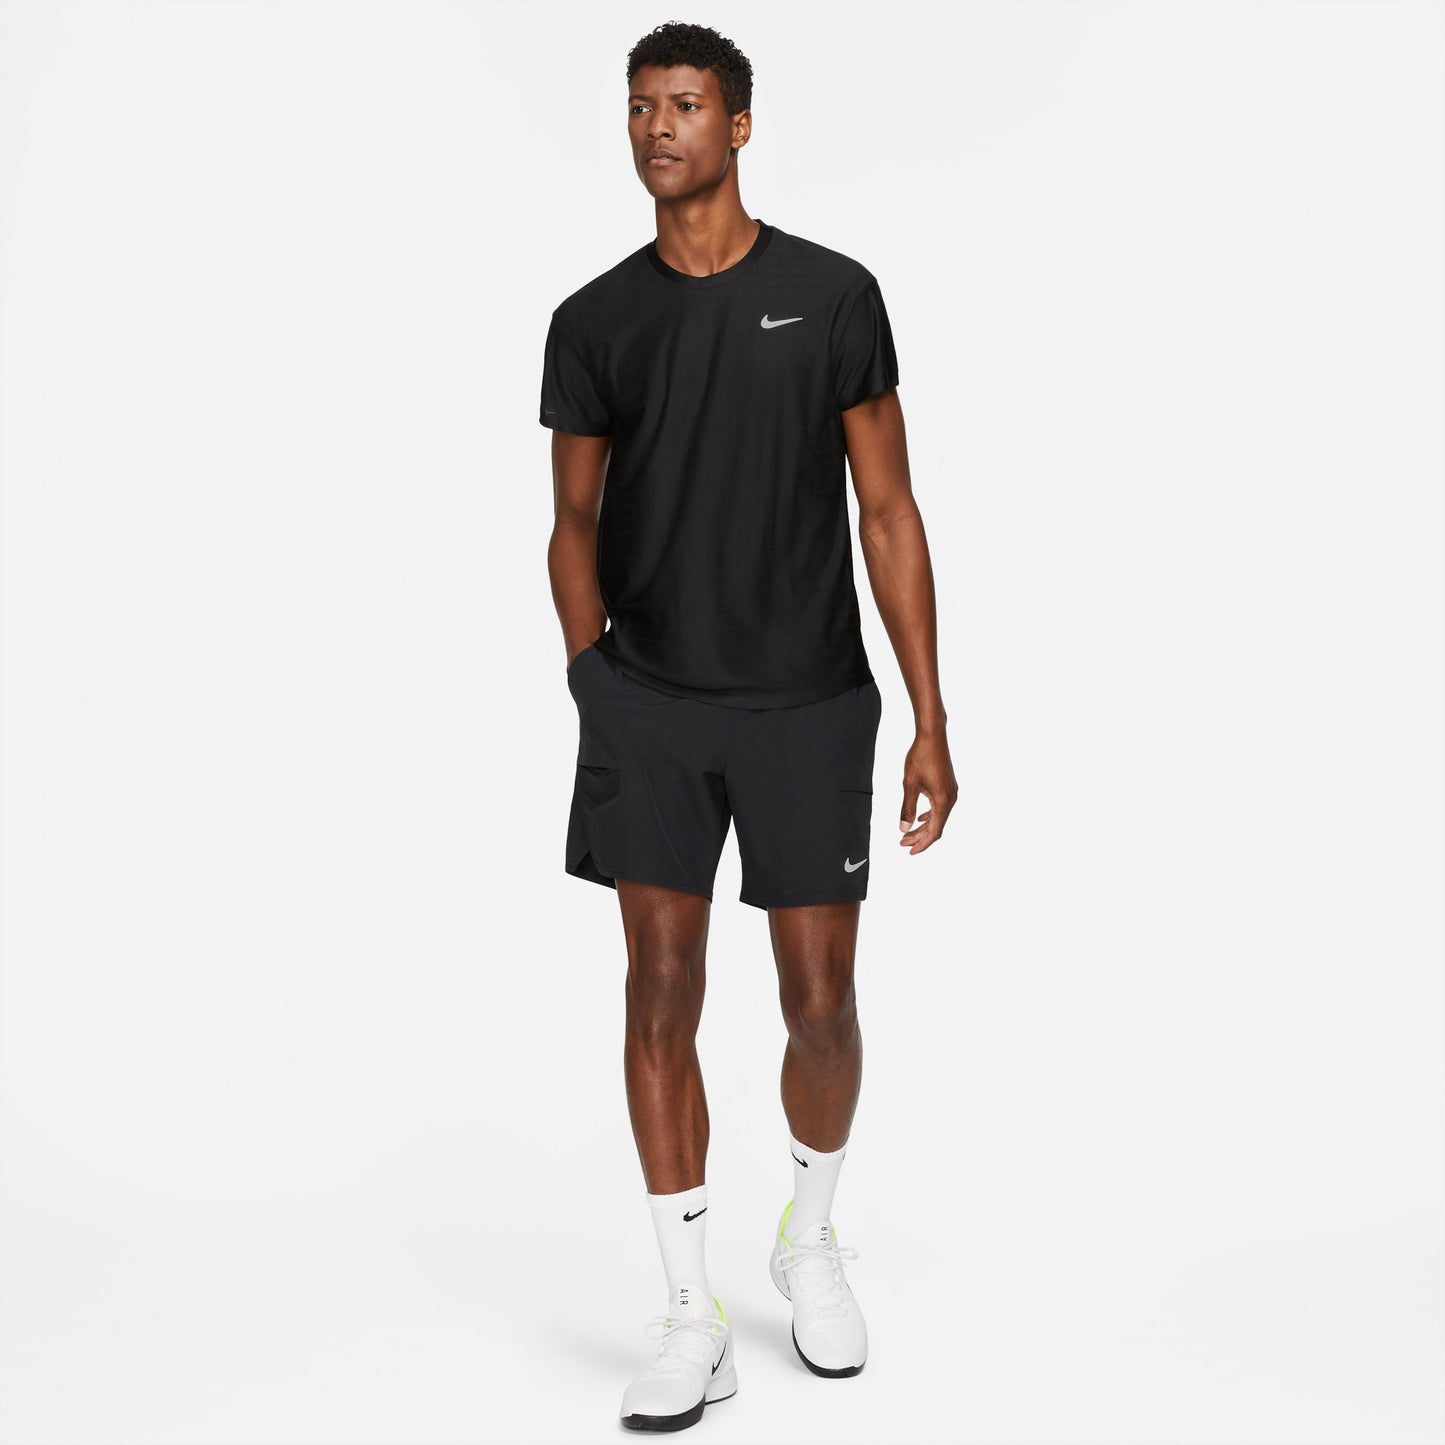 Nike Breathe Advantage Men's Tennis Shirt Black (3)